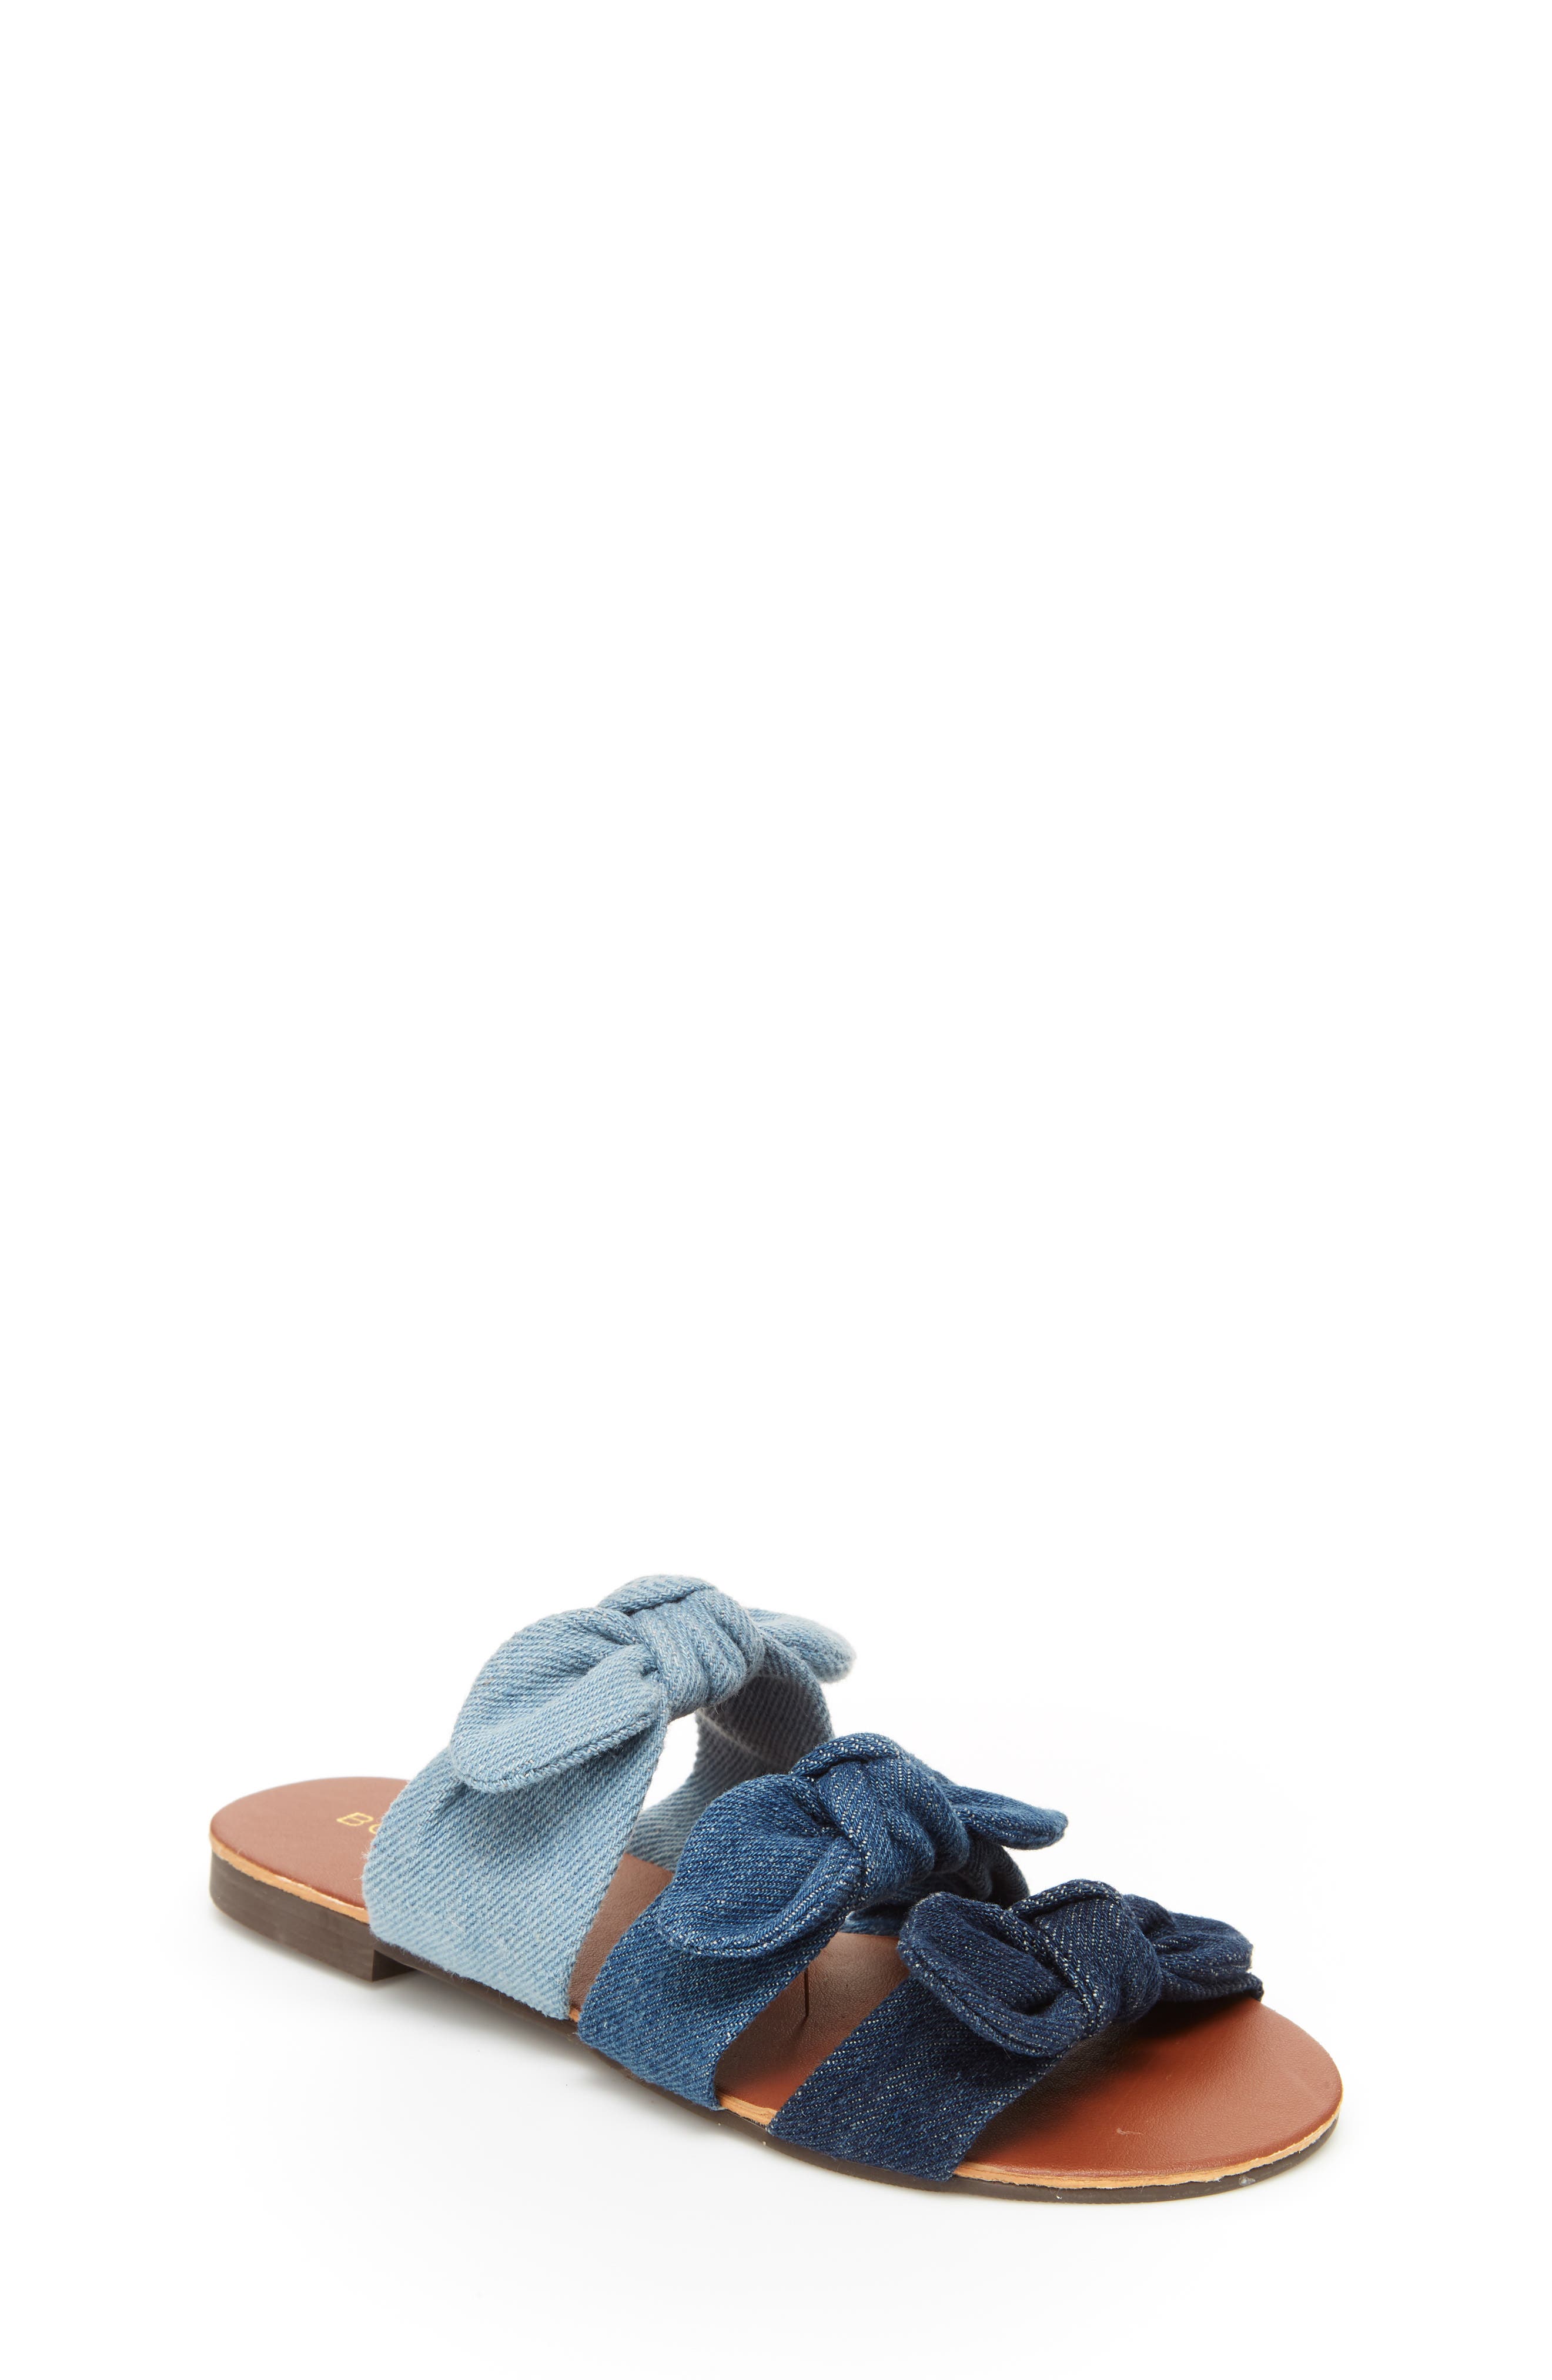 UPC 192170381888 product image for Girl's Bcbgirls Caden Sandal, Size 4 M - Blue | upcitemdb.com